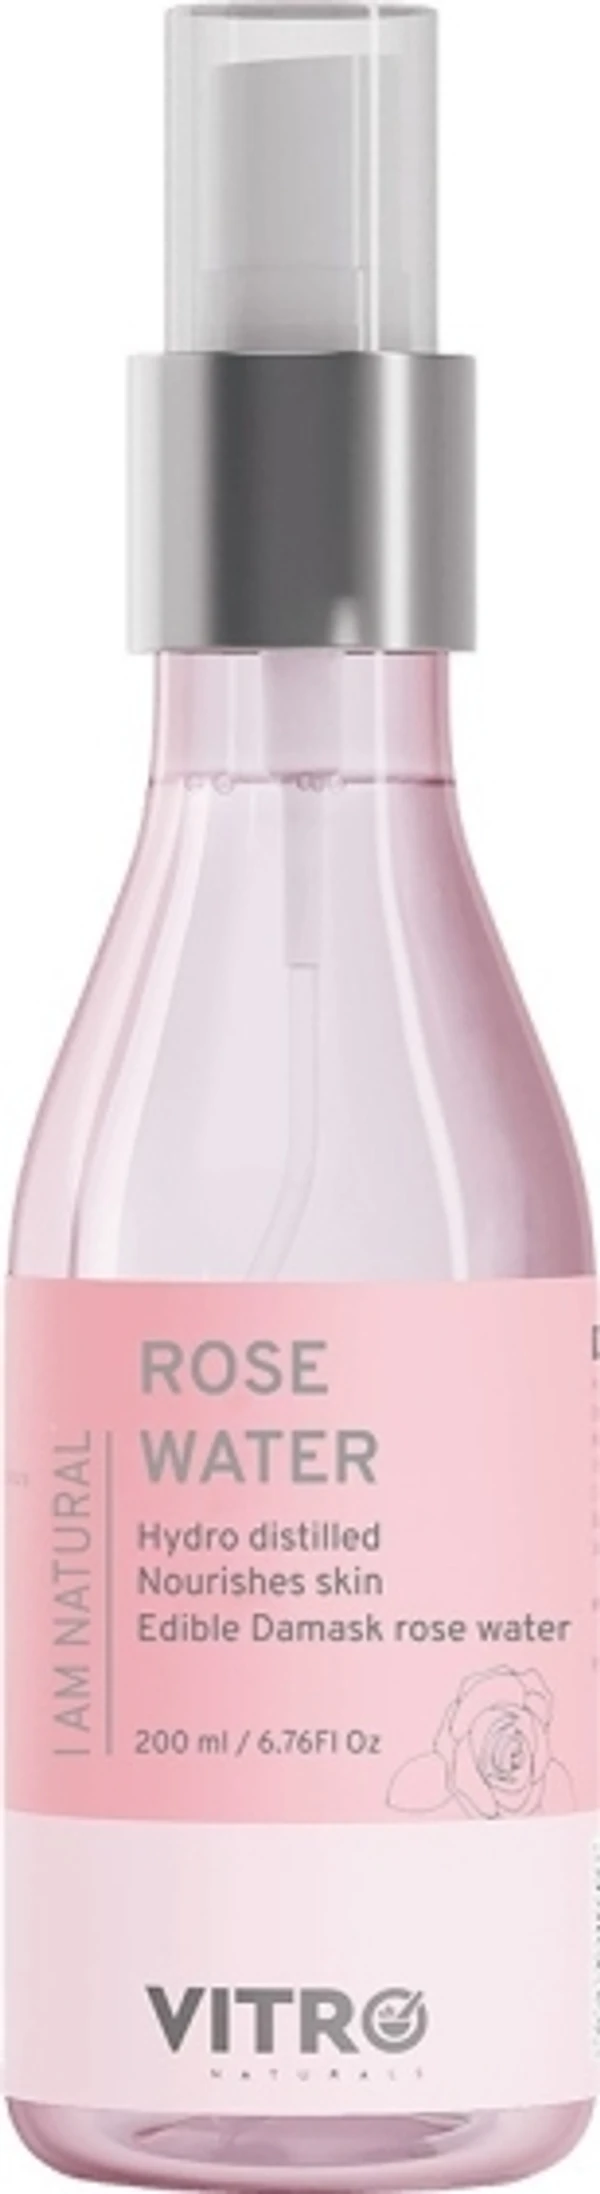 VITRO Hydro Distilled|Pure Rose Water